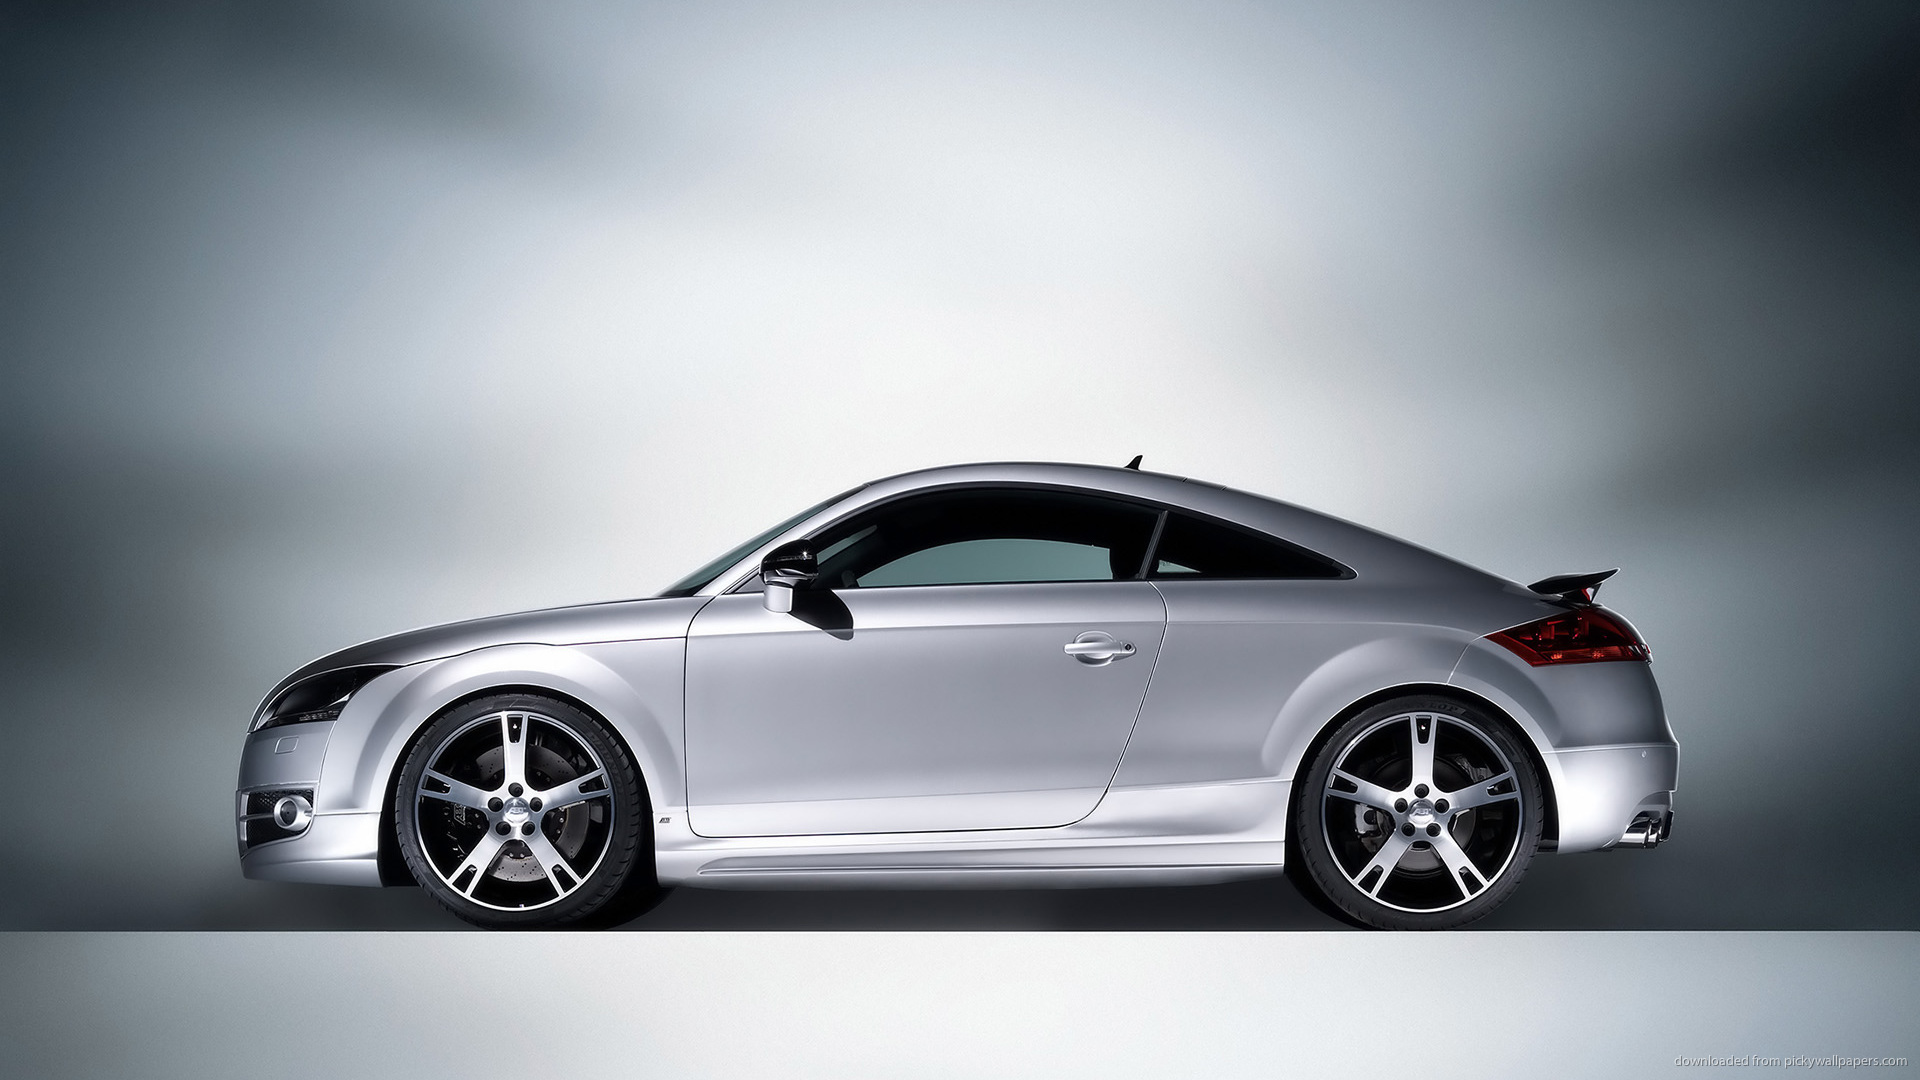 Audi TT Wallpapers HD Download